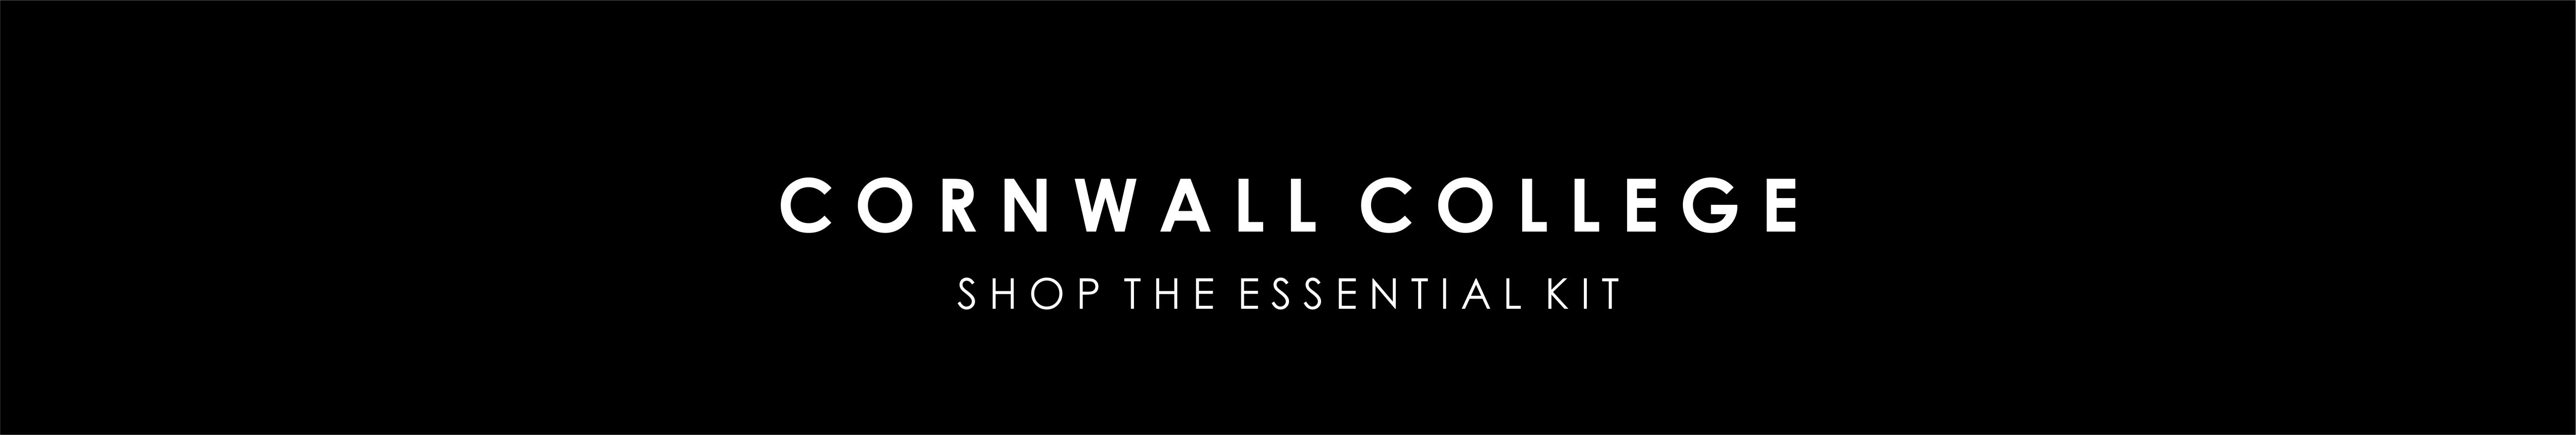 cornwall-college-banner-duchy.jpg